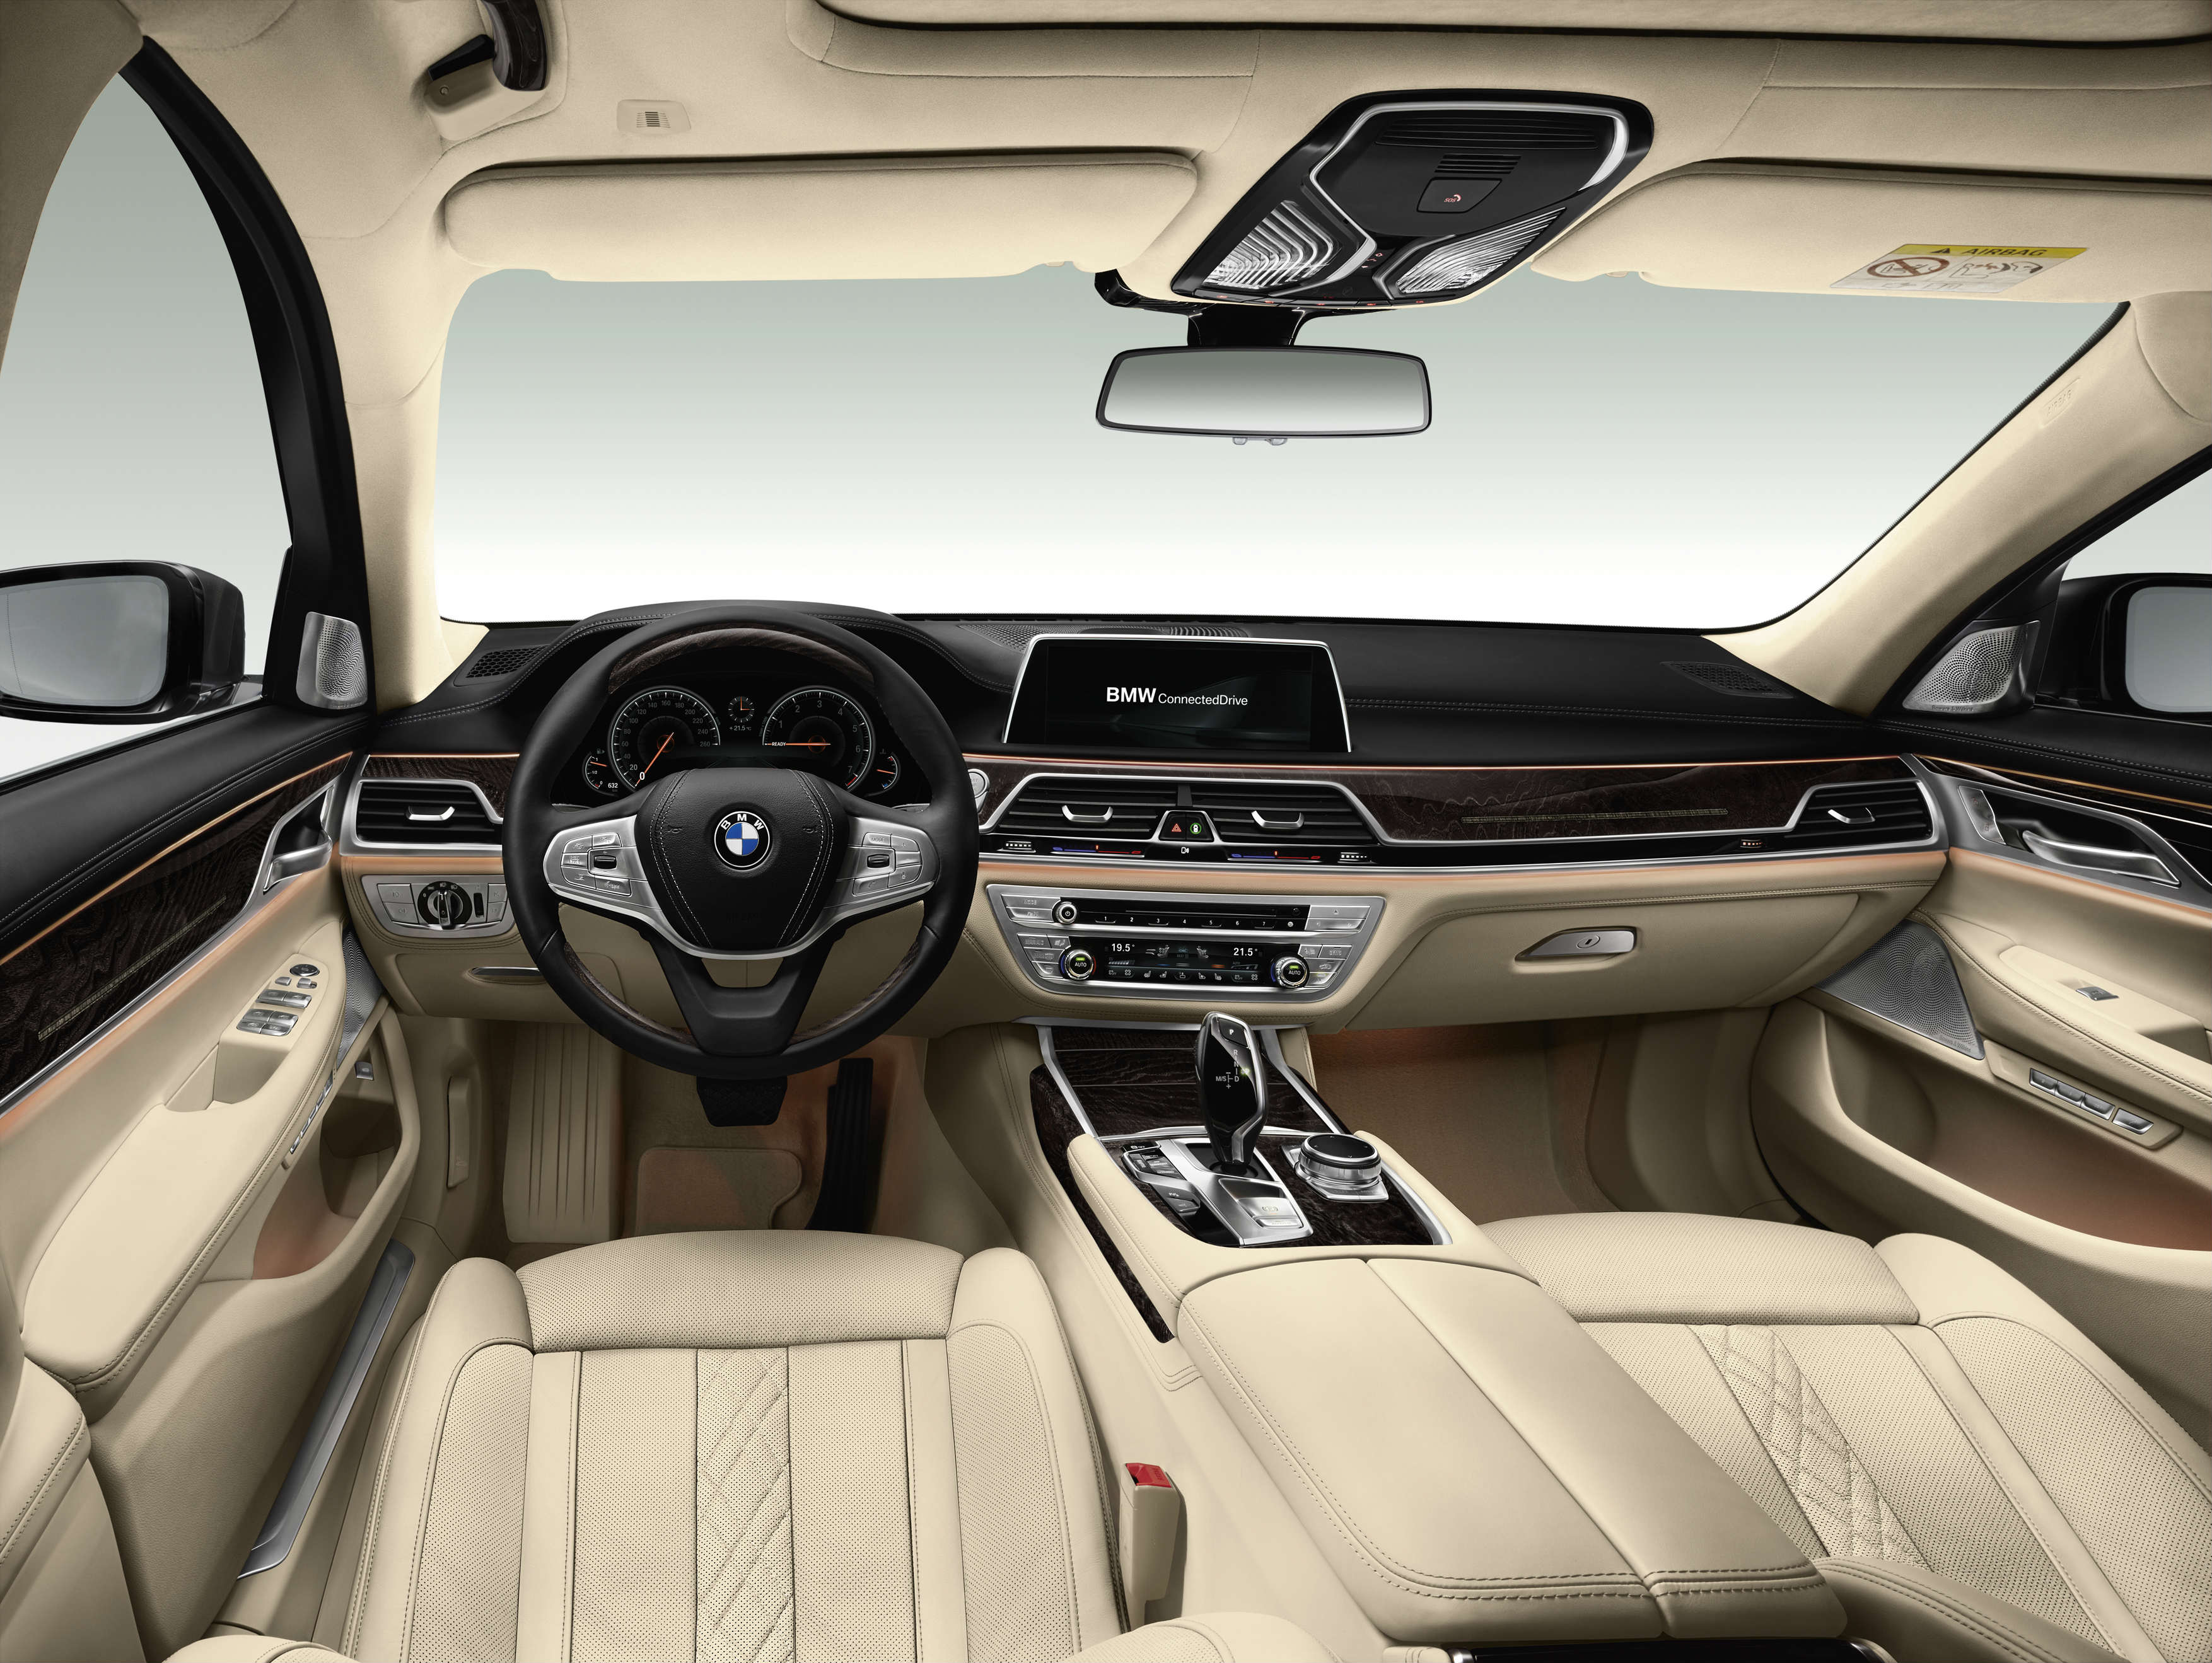 BMW 7-series interior 2015